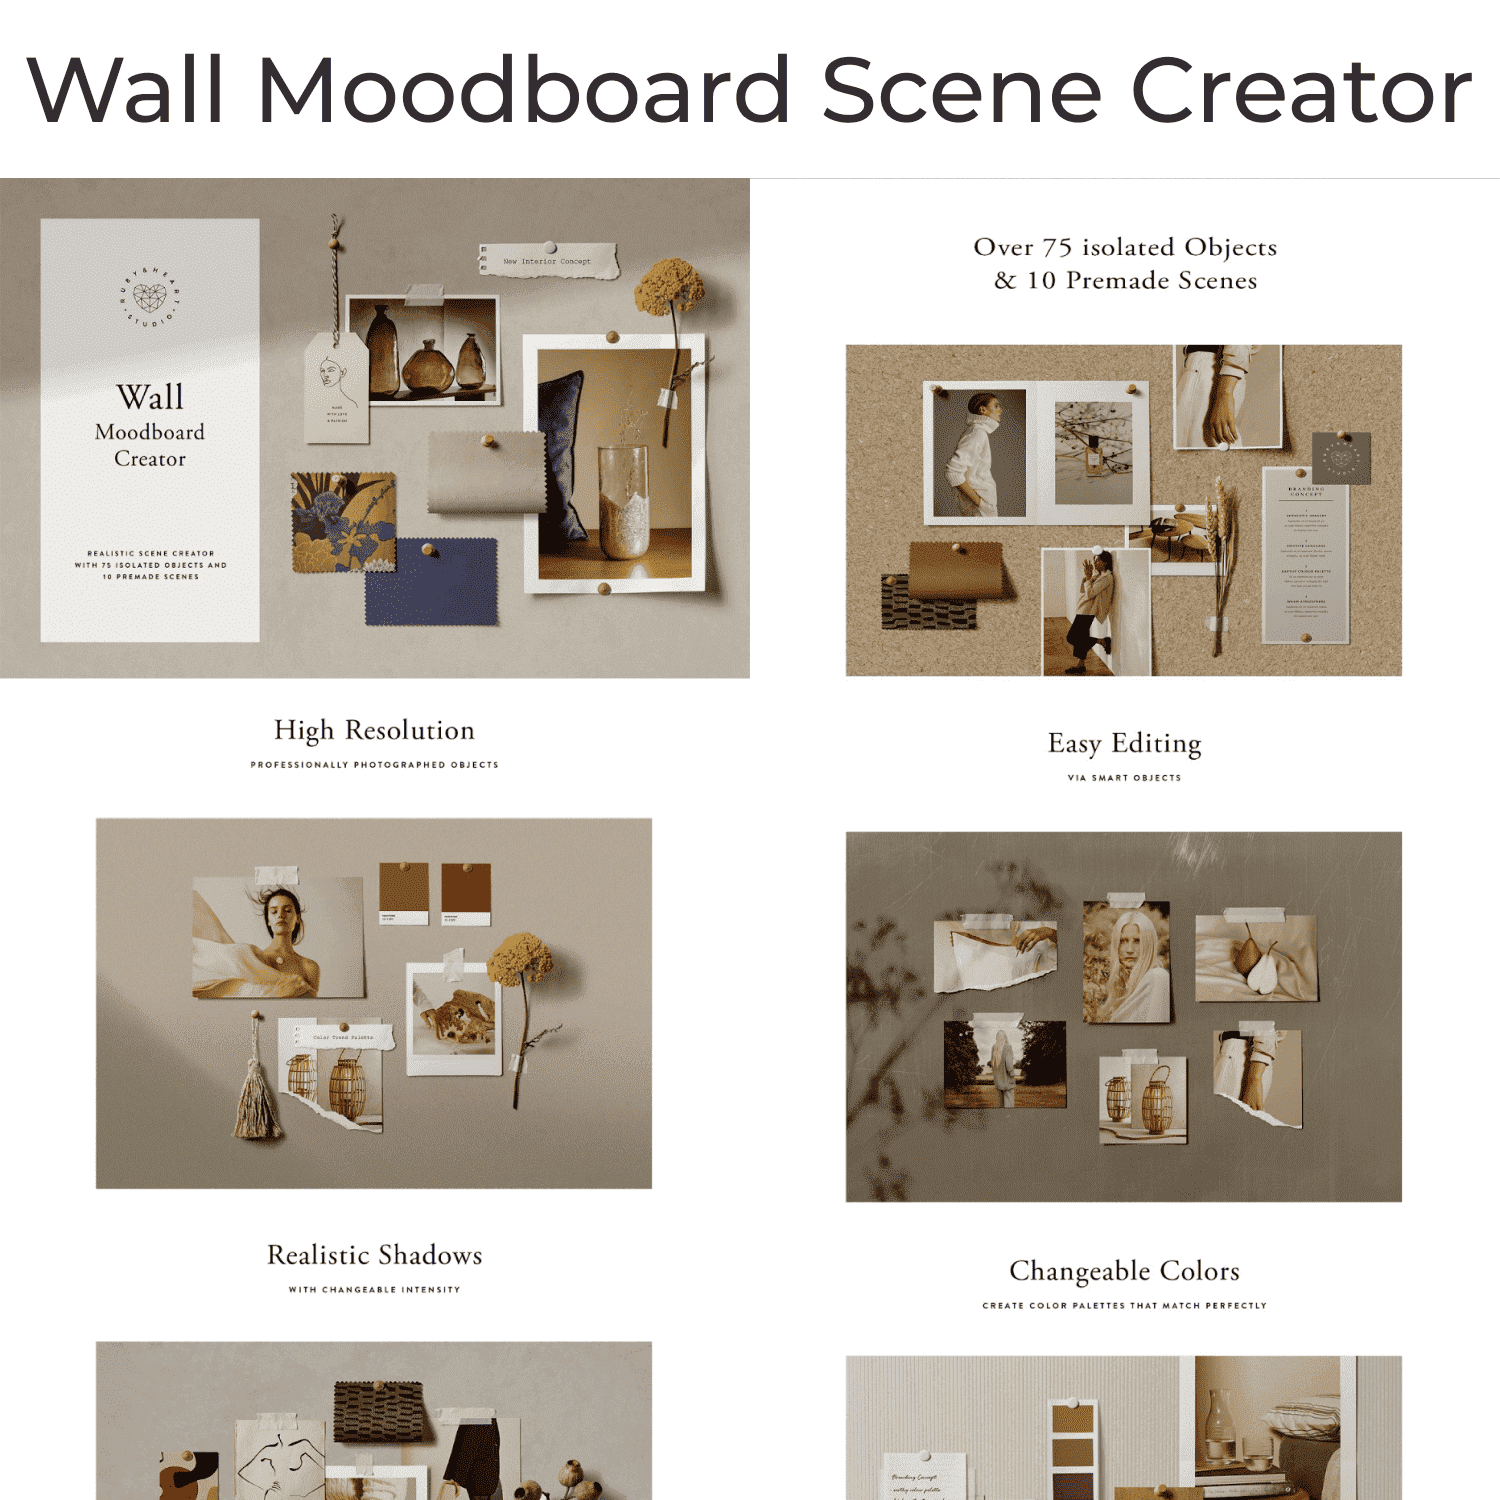 Wall Moodboard Scene Creator - "Realistic Scene Creator".